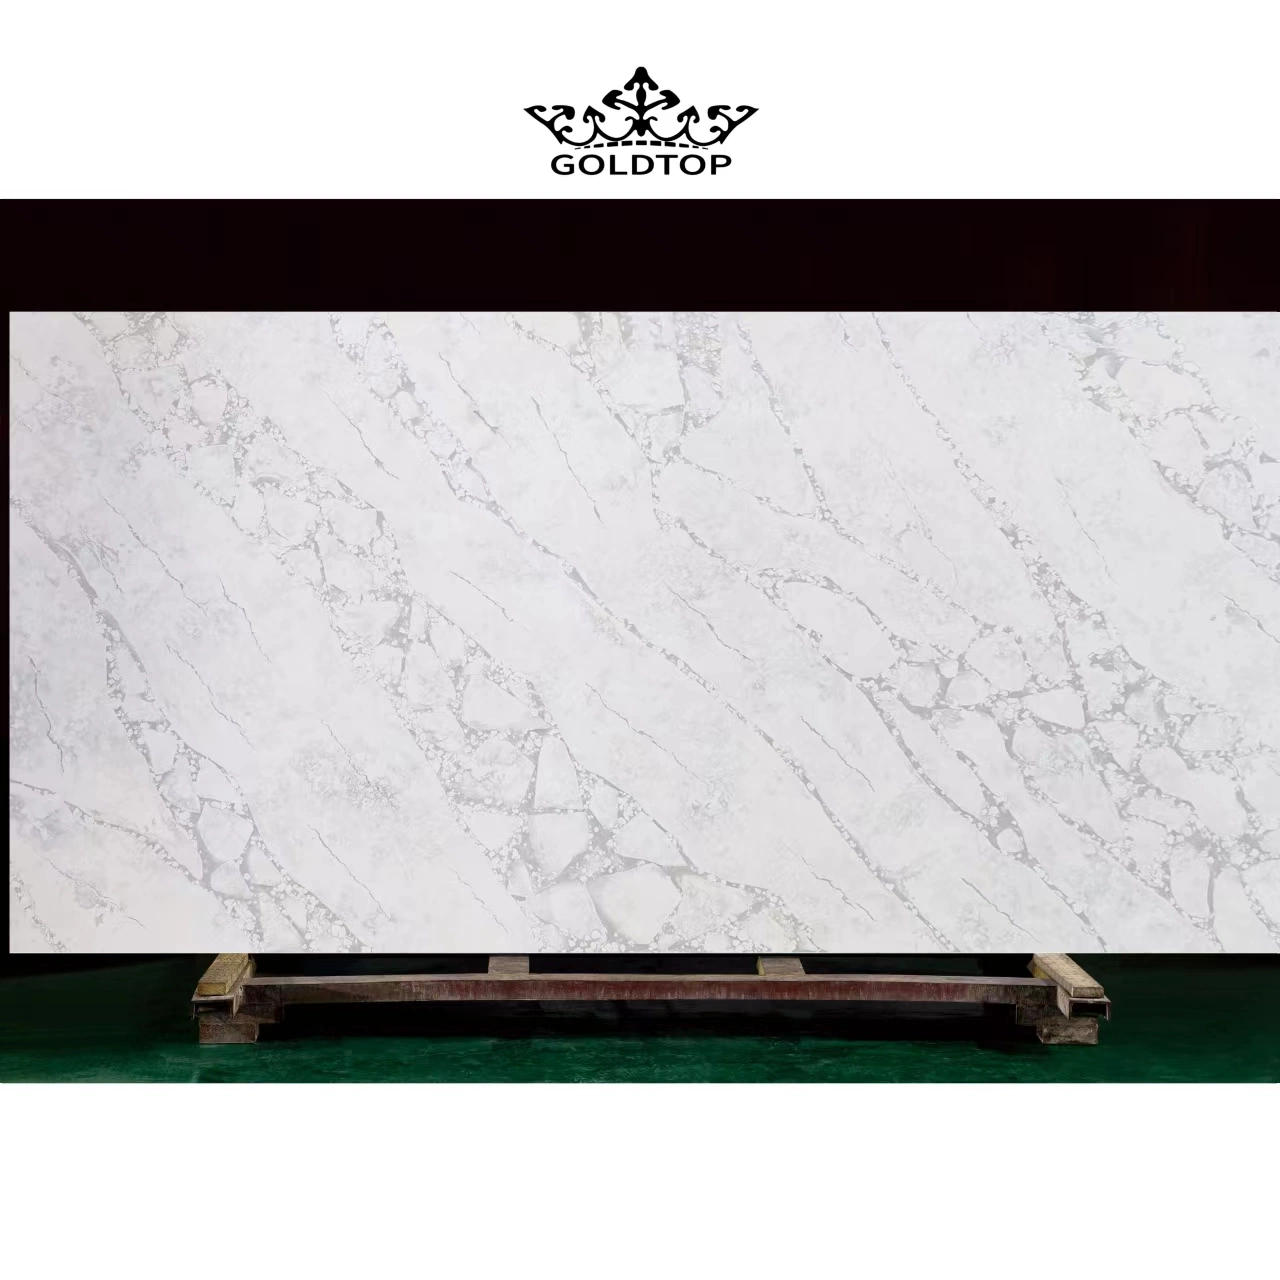 Artificial Stone Polished Factory Price Concrete Series Stone Slab Quarz Quartzo Quartz Countertop/Vanity/Floor/Cabinet/Wall Tiles